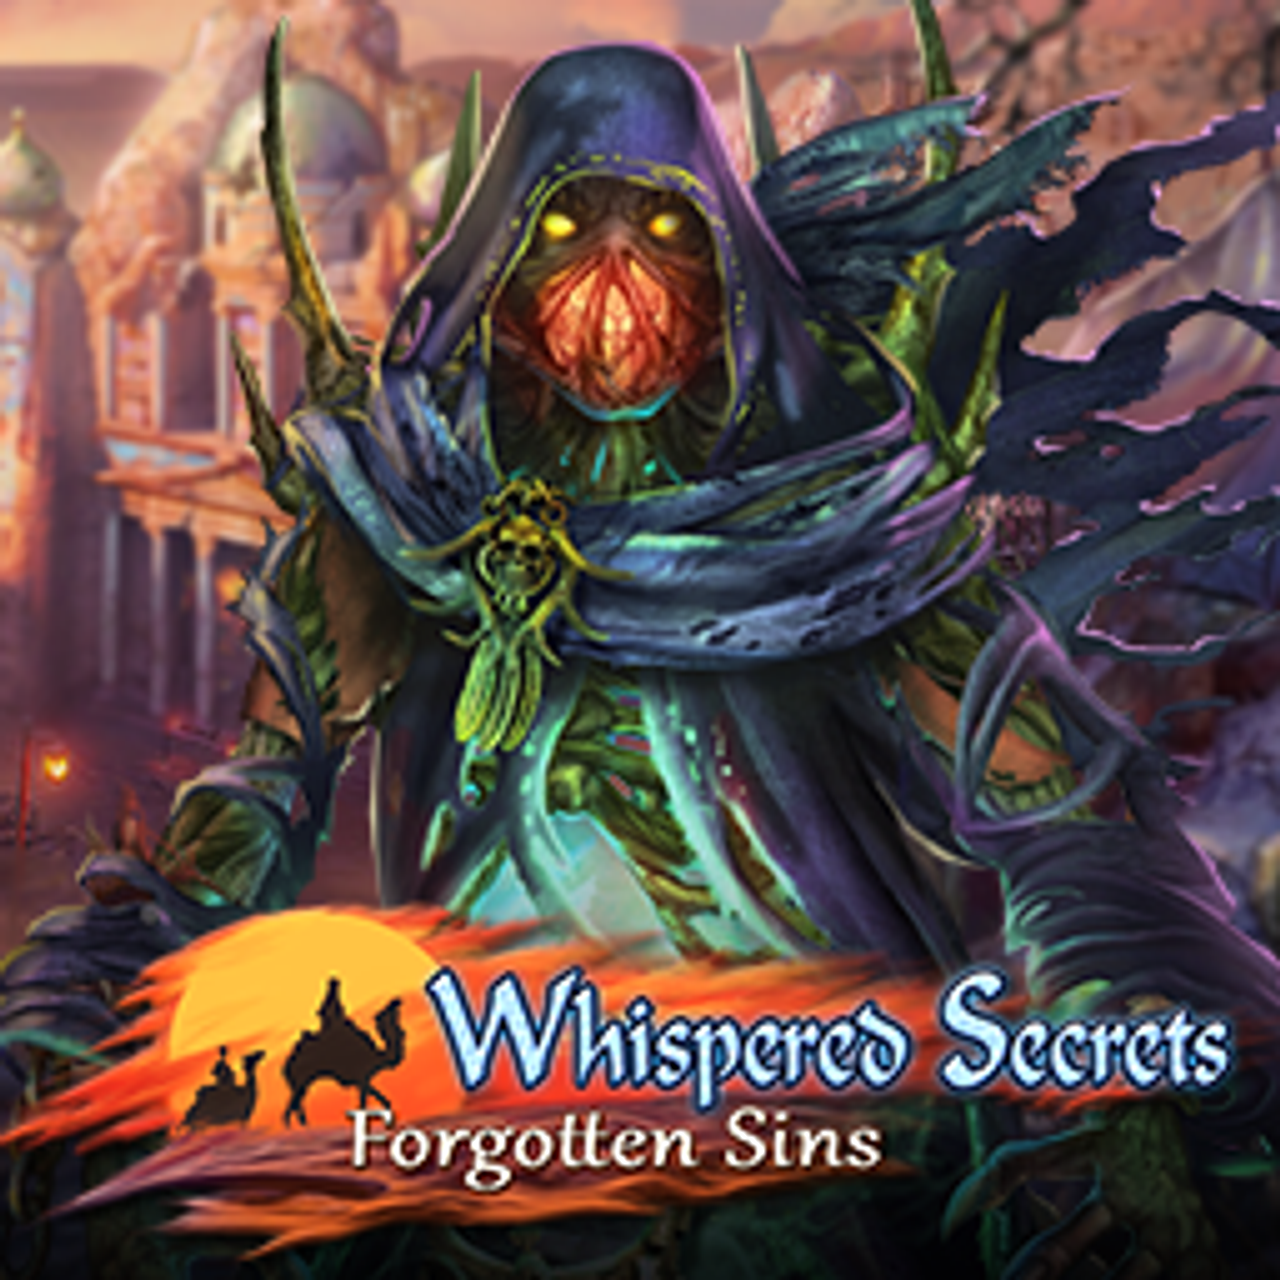 Whispered Secrets: Forgotten Sins